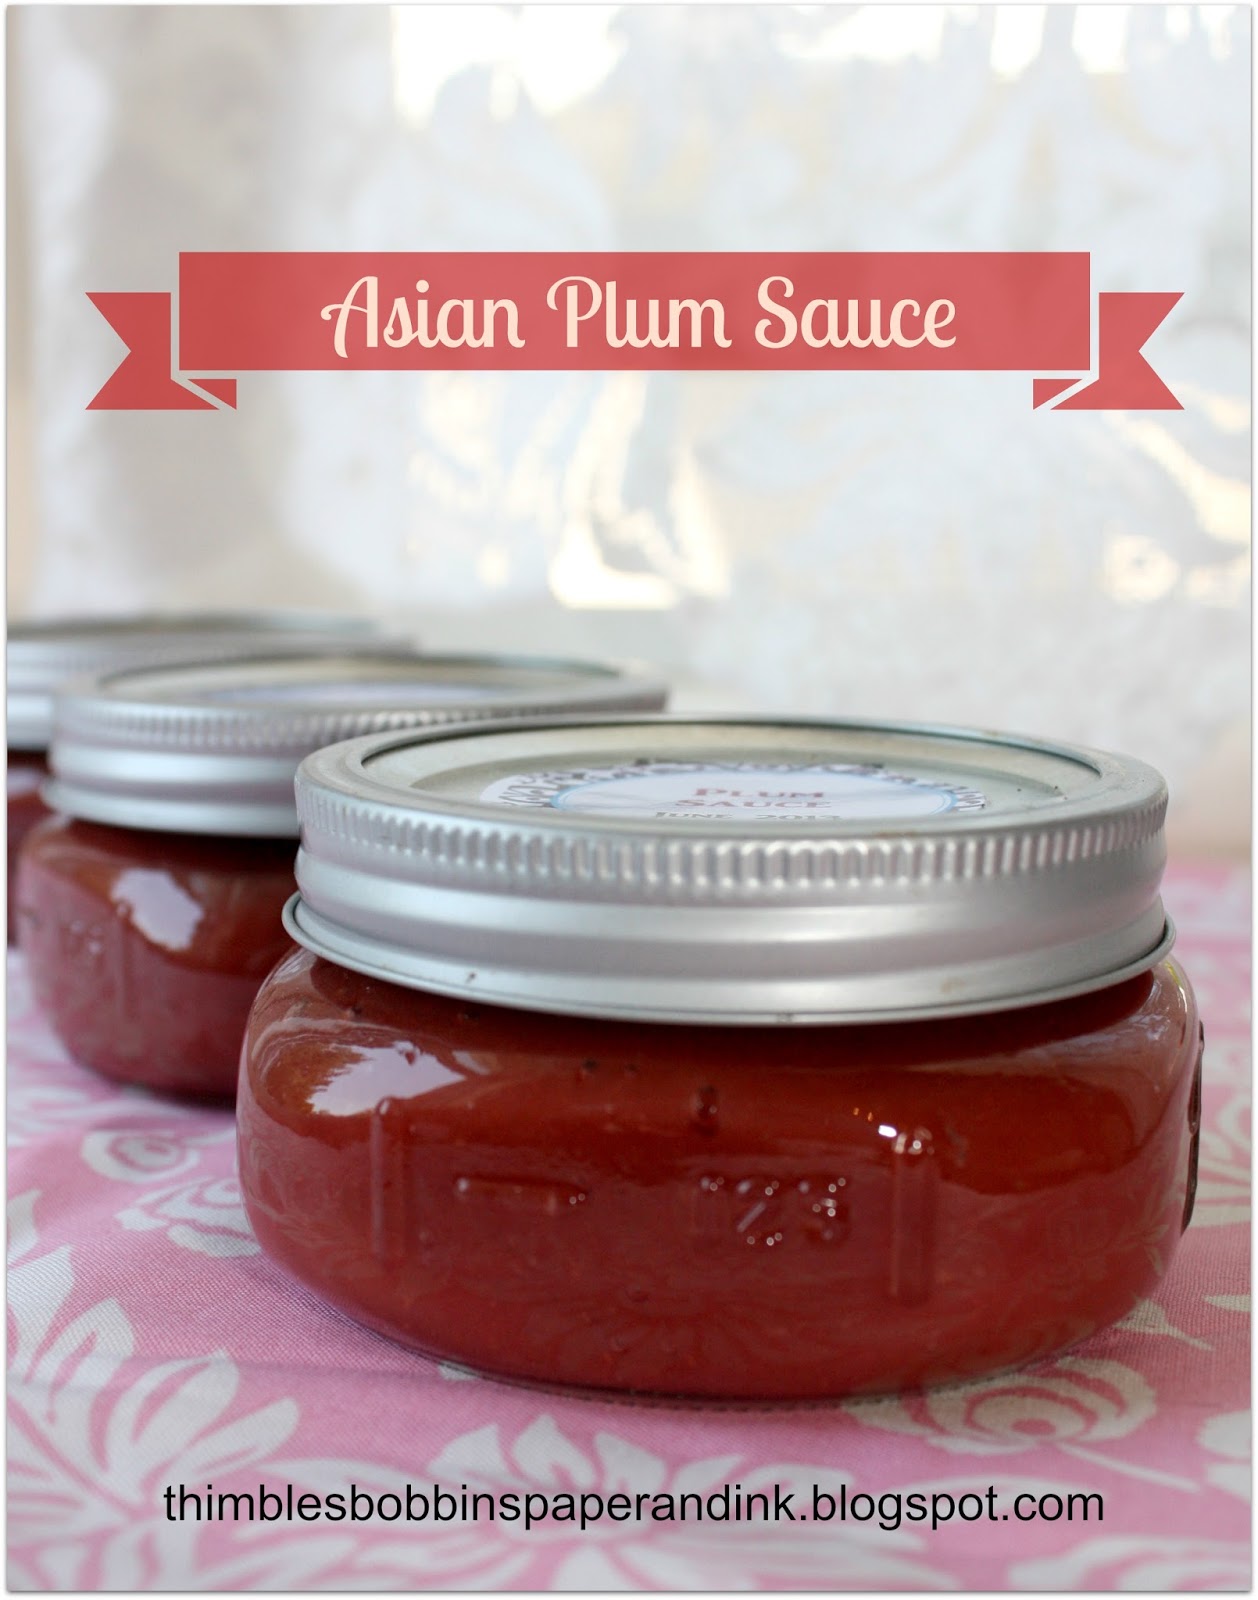 Thimbles, Bobbins, Paper and Ink: Asian Plum Sauce